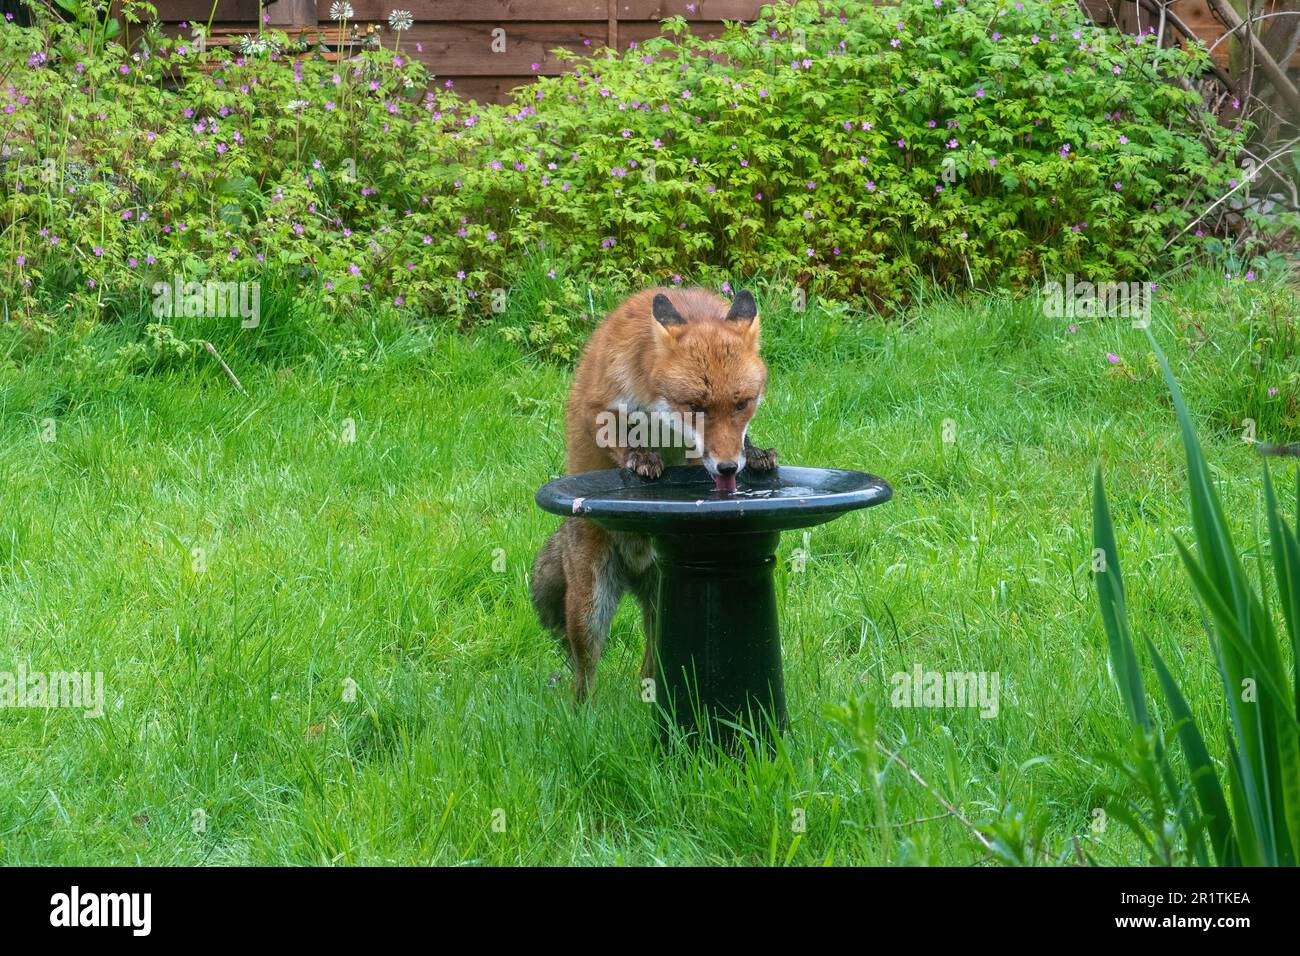 Urban fox (Vulpes vulpes, red fox) drinking water from a bird bath in a garden, England, UK. Garden wildlife Stock Photo